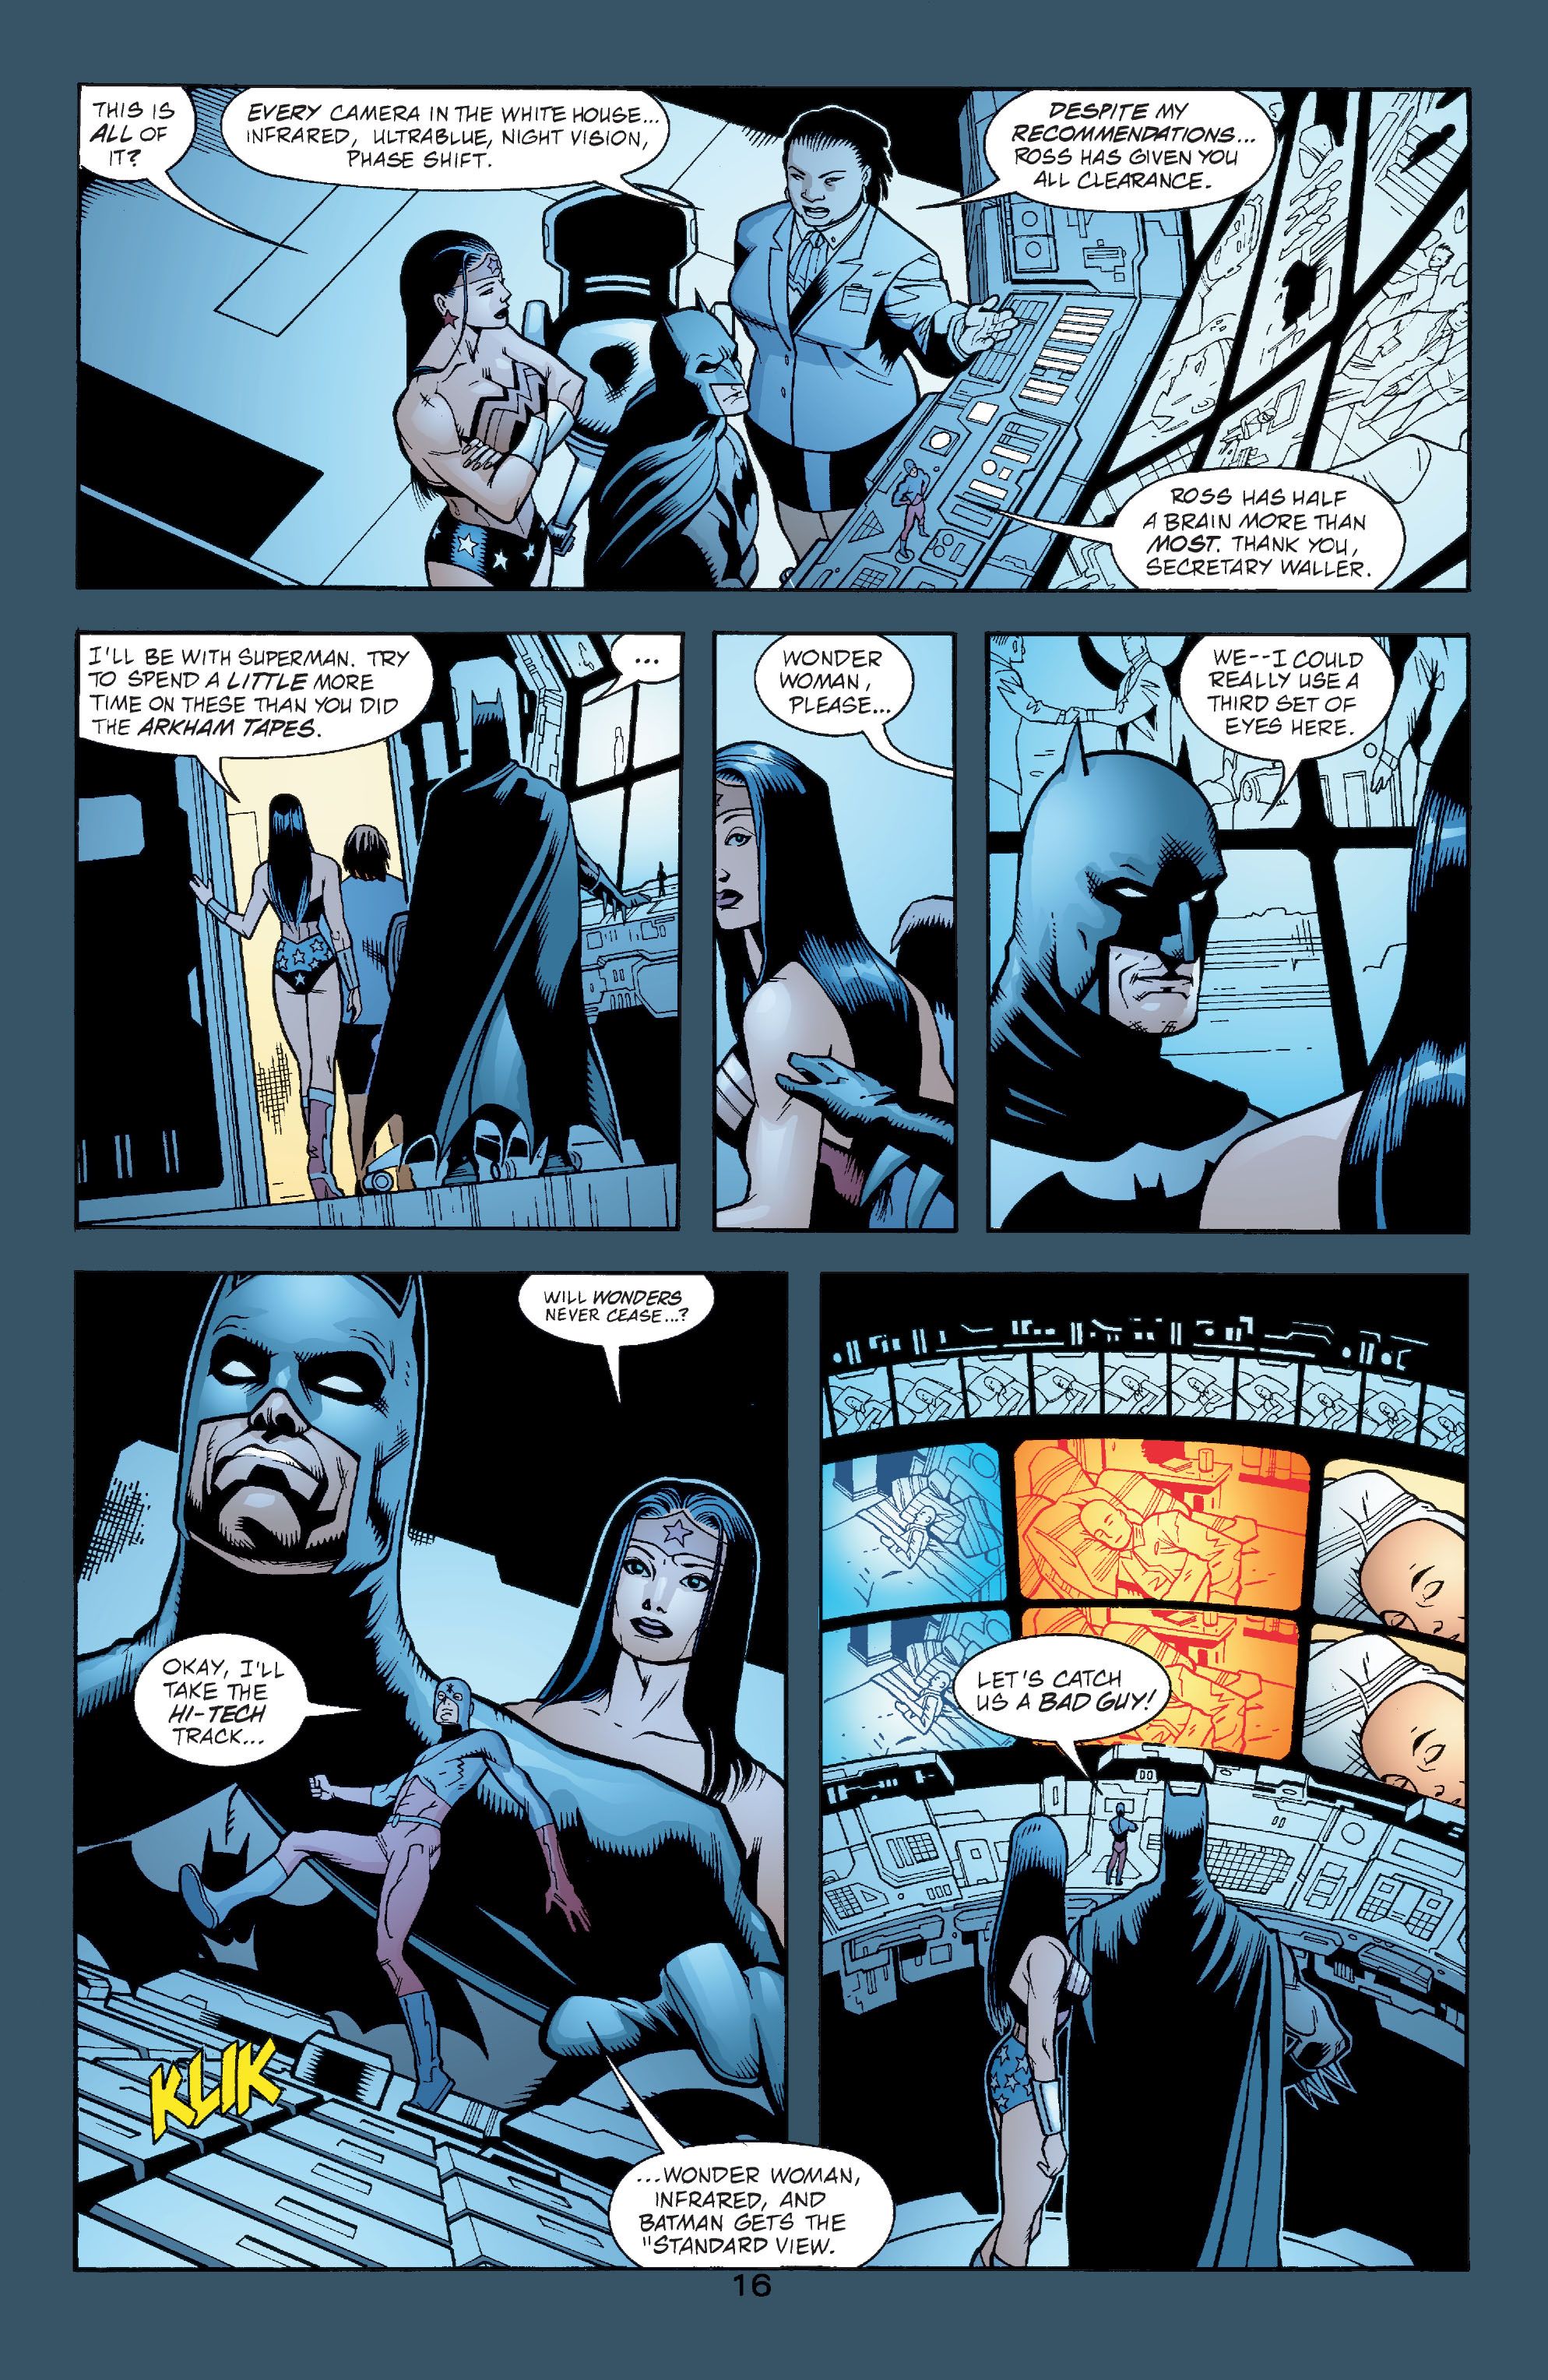 Batman prosi Wonder Woman o pomoc